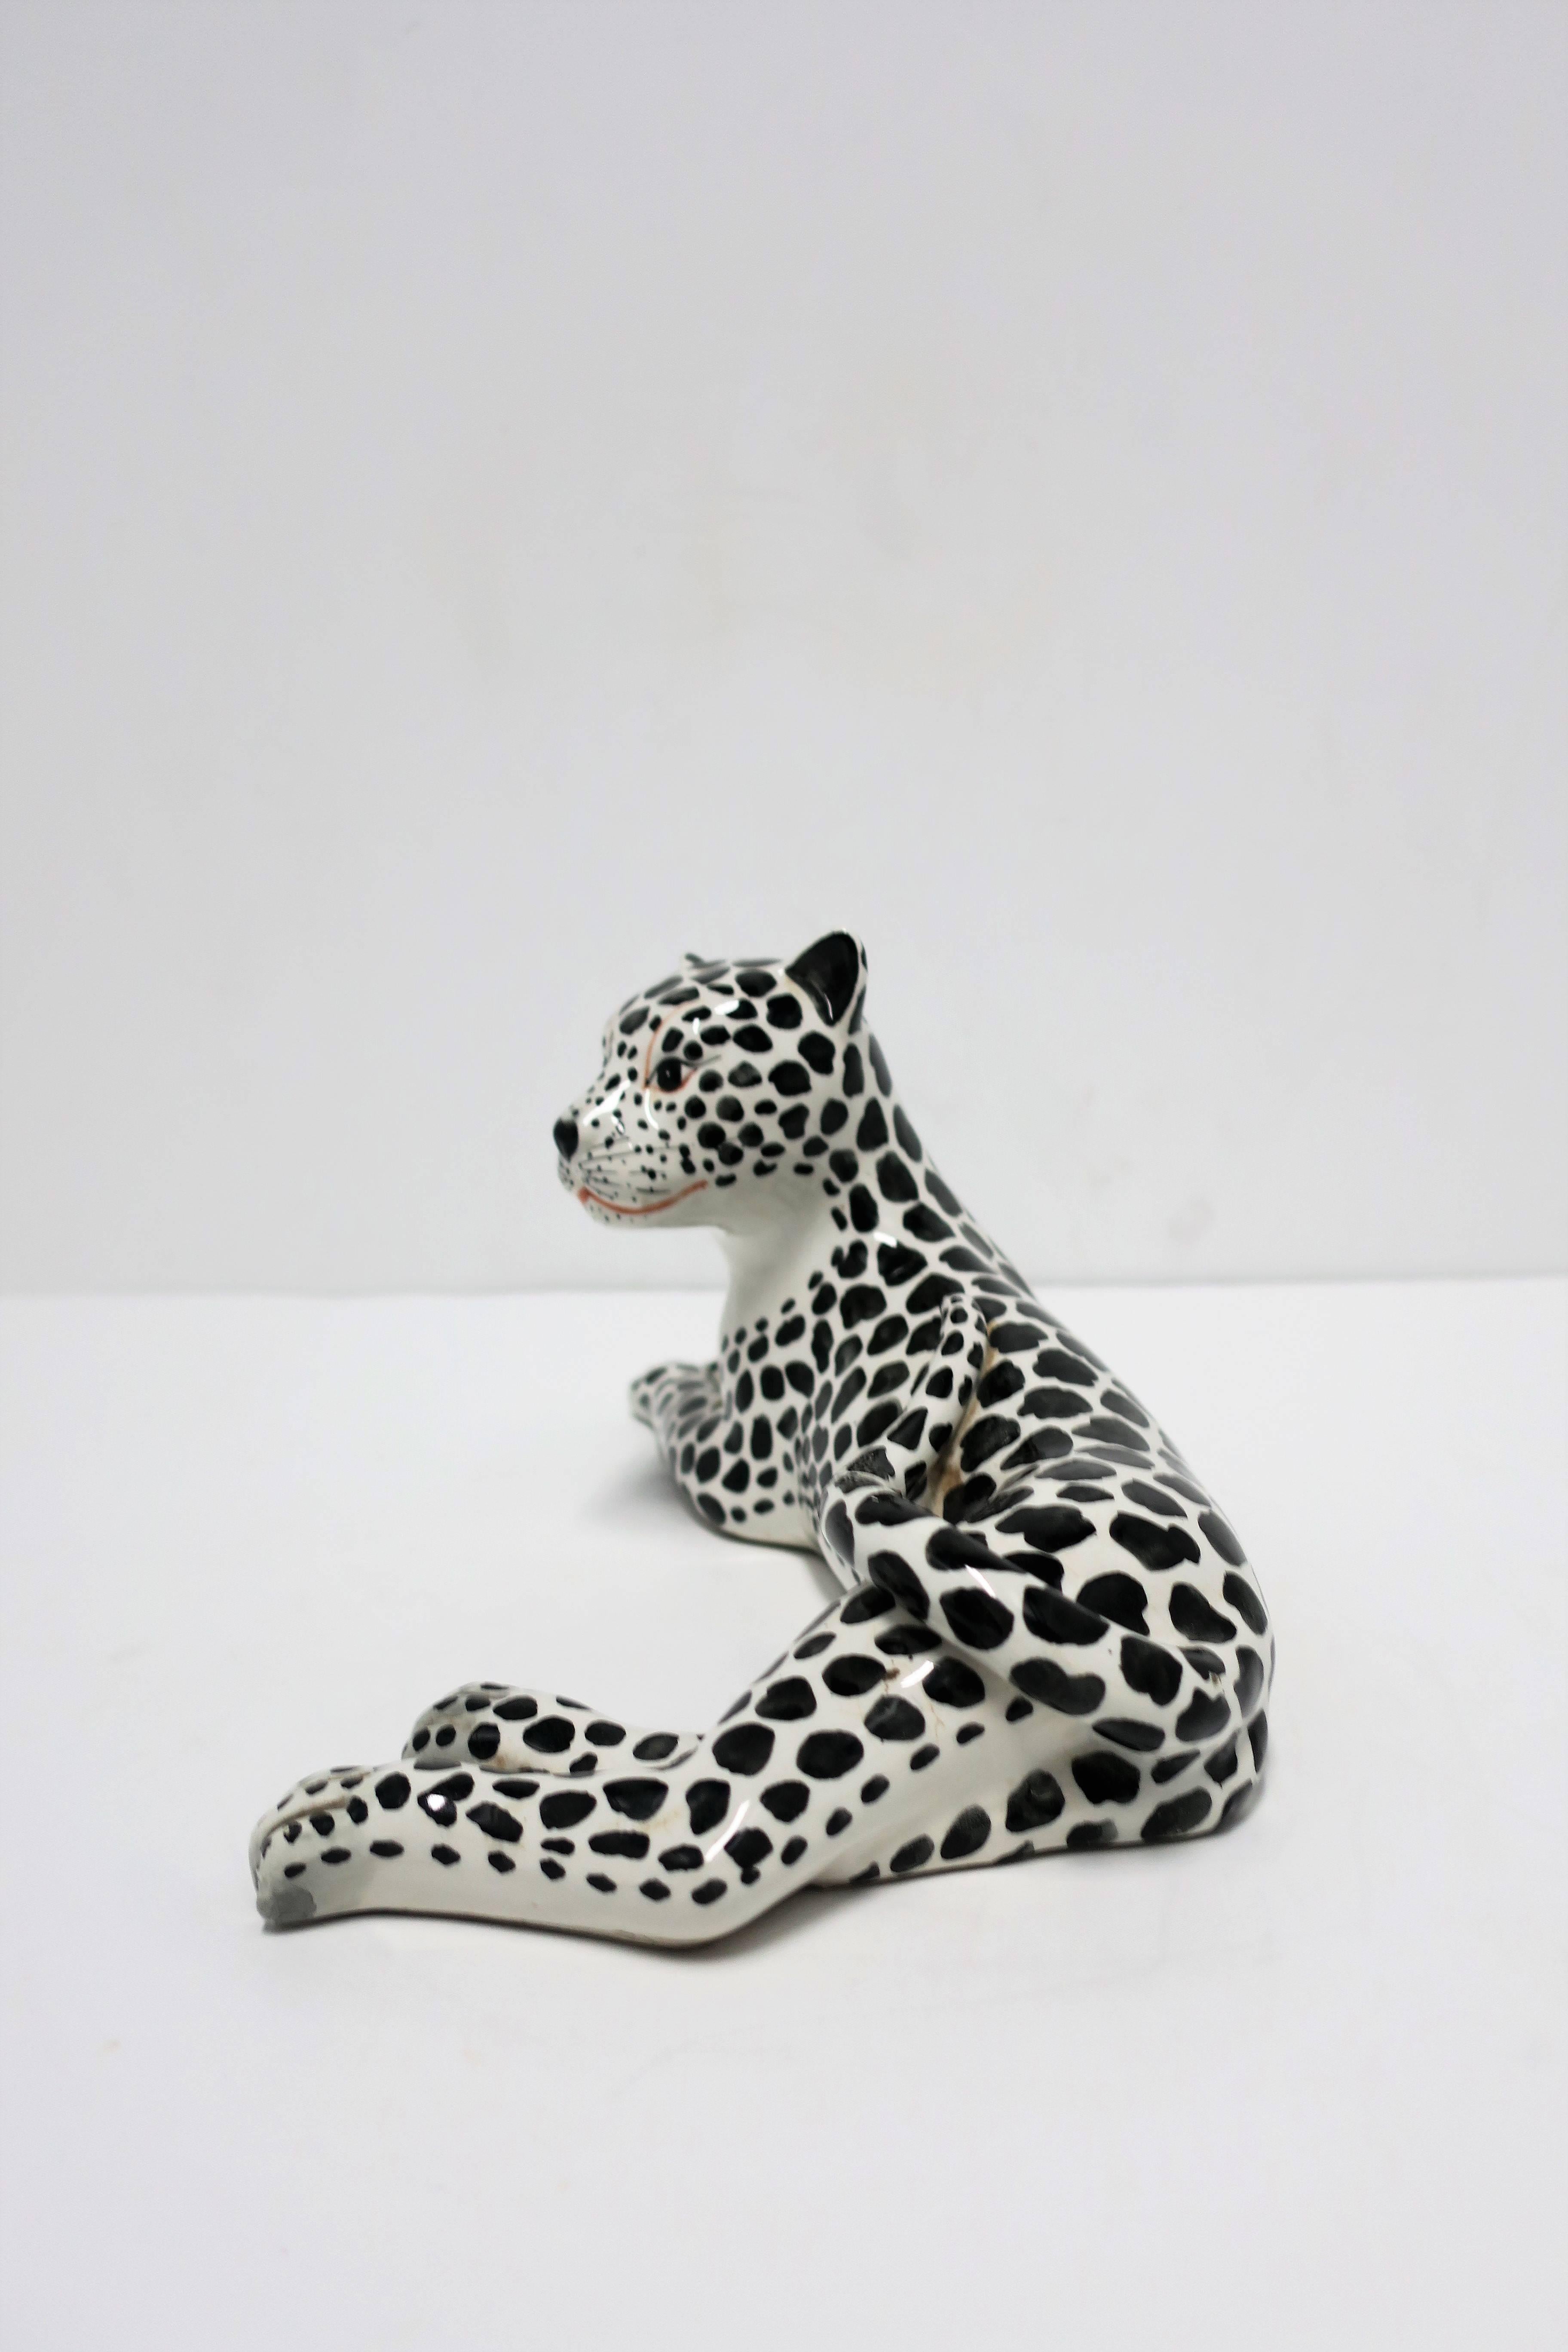 Glazed Italian Black and White Cheetah or Leopard Cat Sculpture